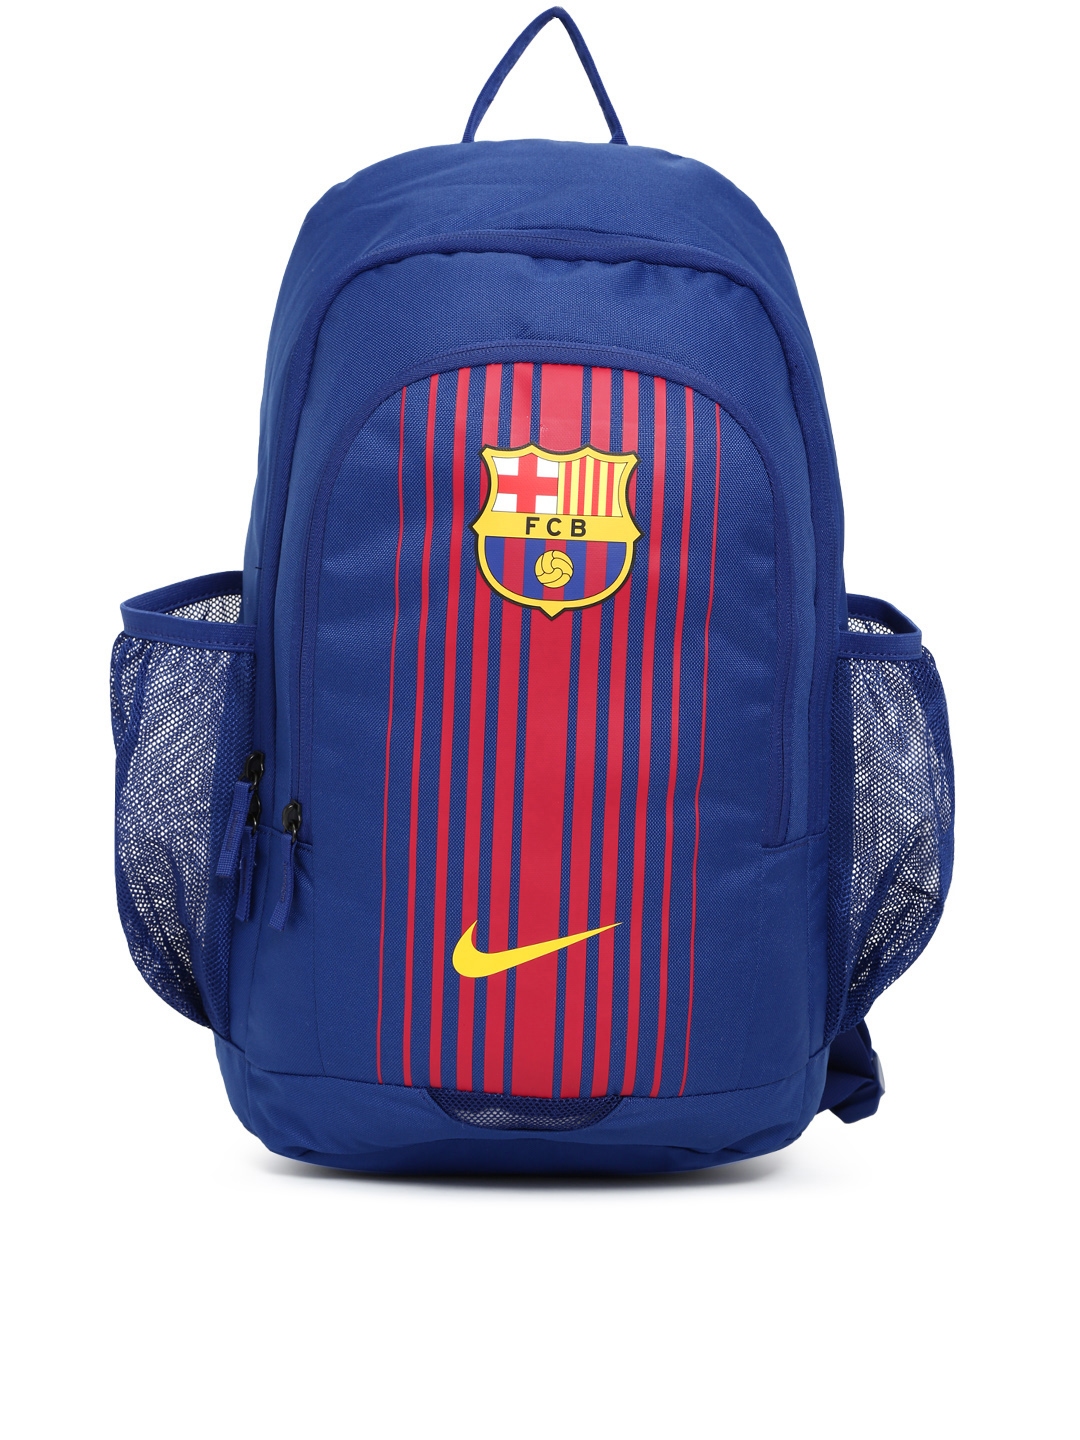 Nike FC Barcelona Stadium Shoe bag 620 CK6645620  Sports accessories   Official archives of Merkandi  Merkandi B2B